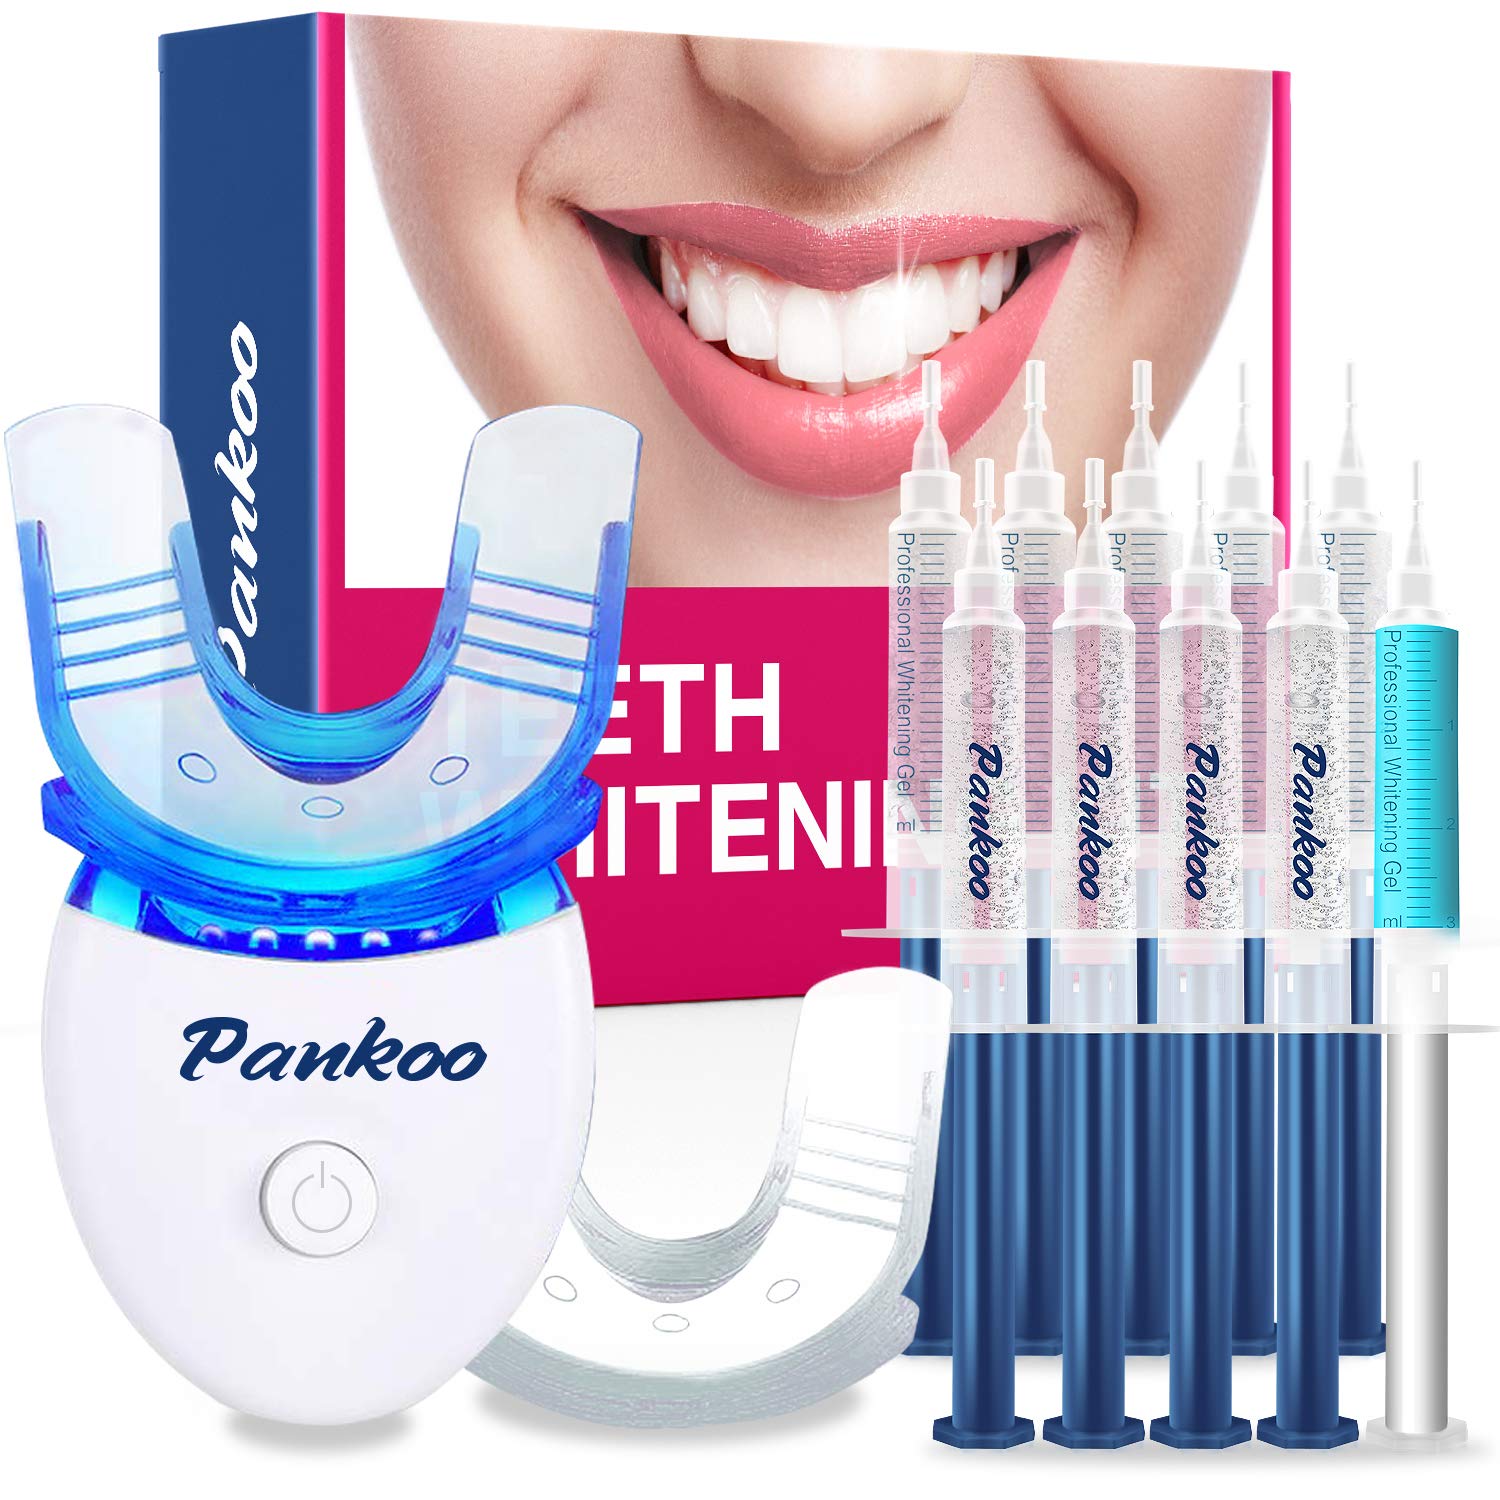 8. Pankoo Teeth Whitening Kit with LED Light